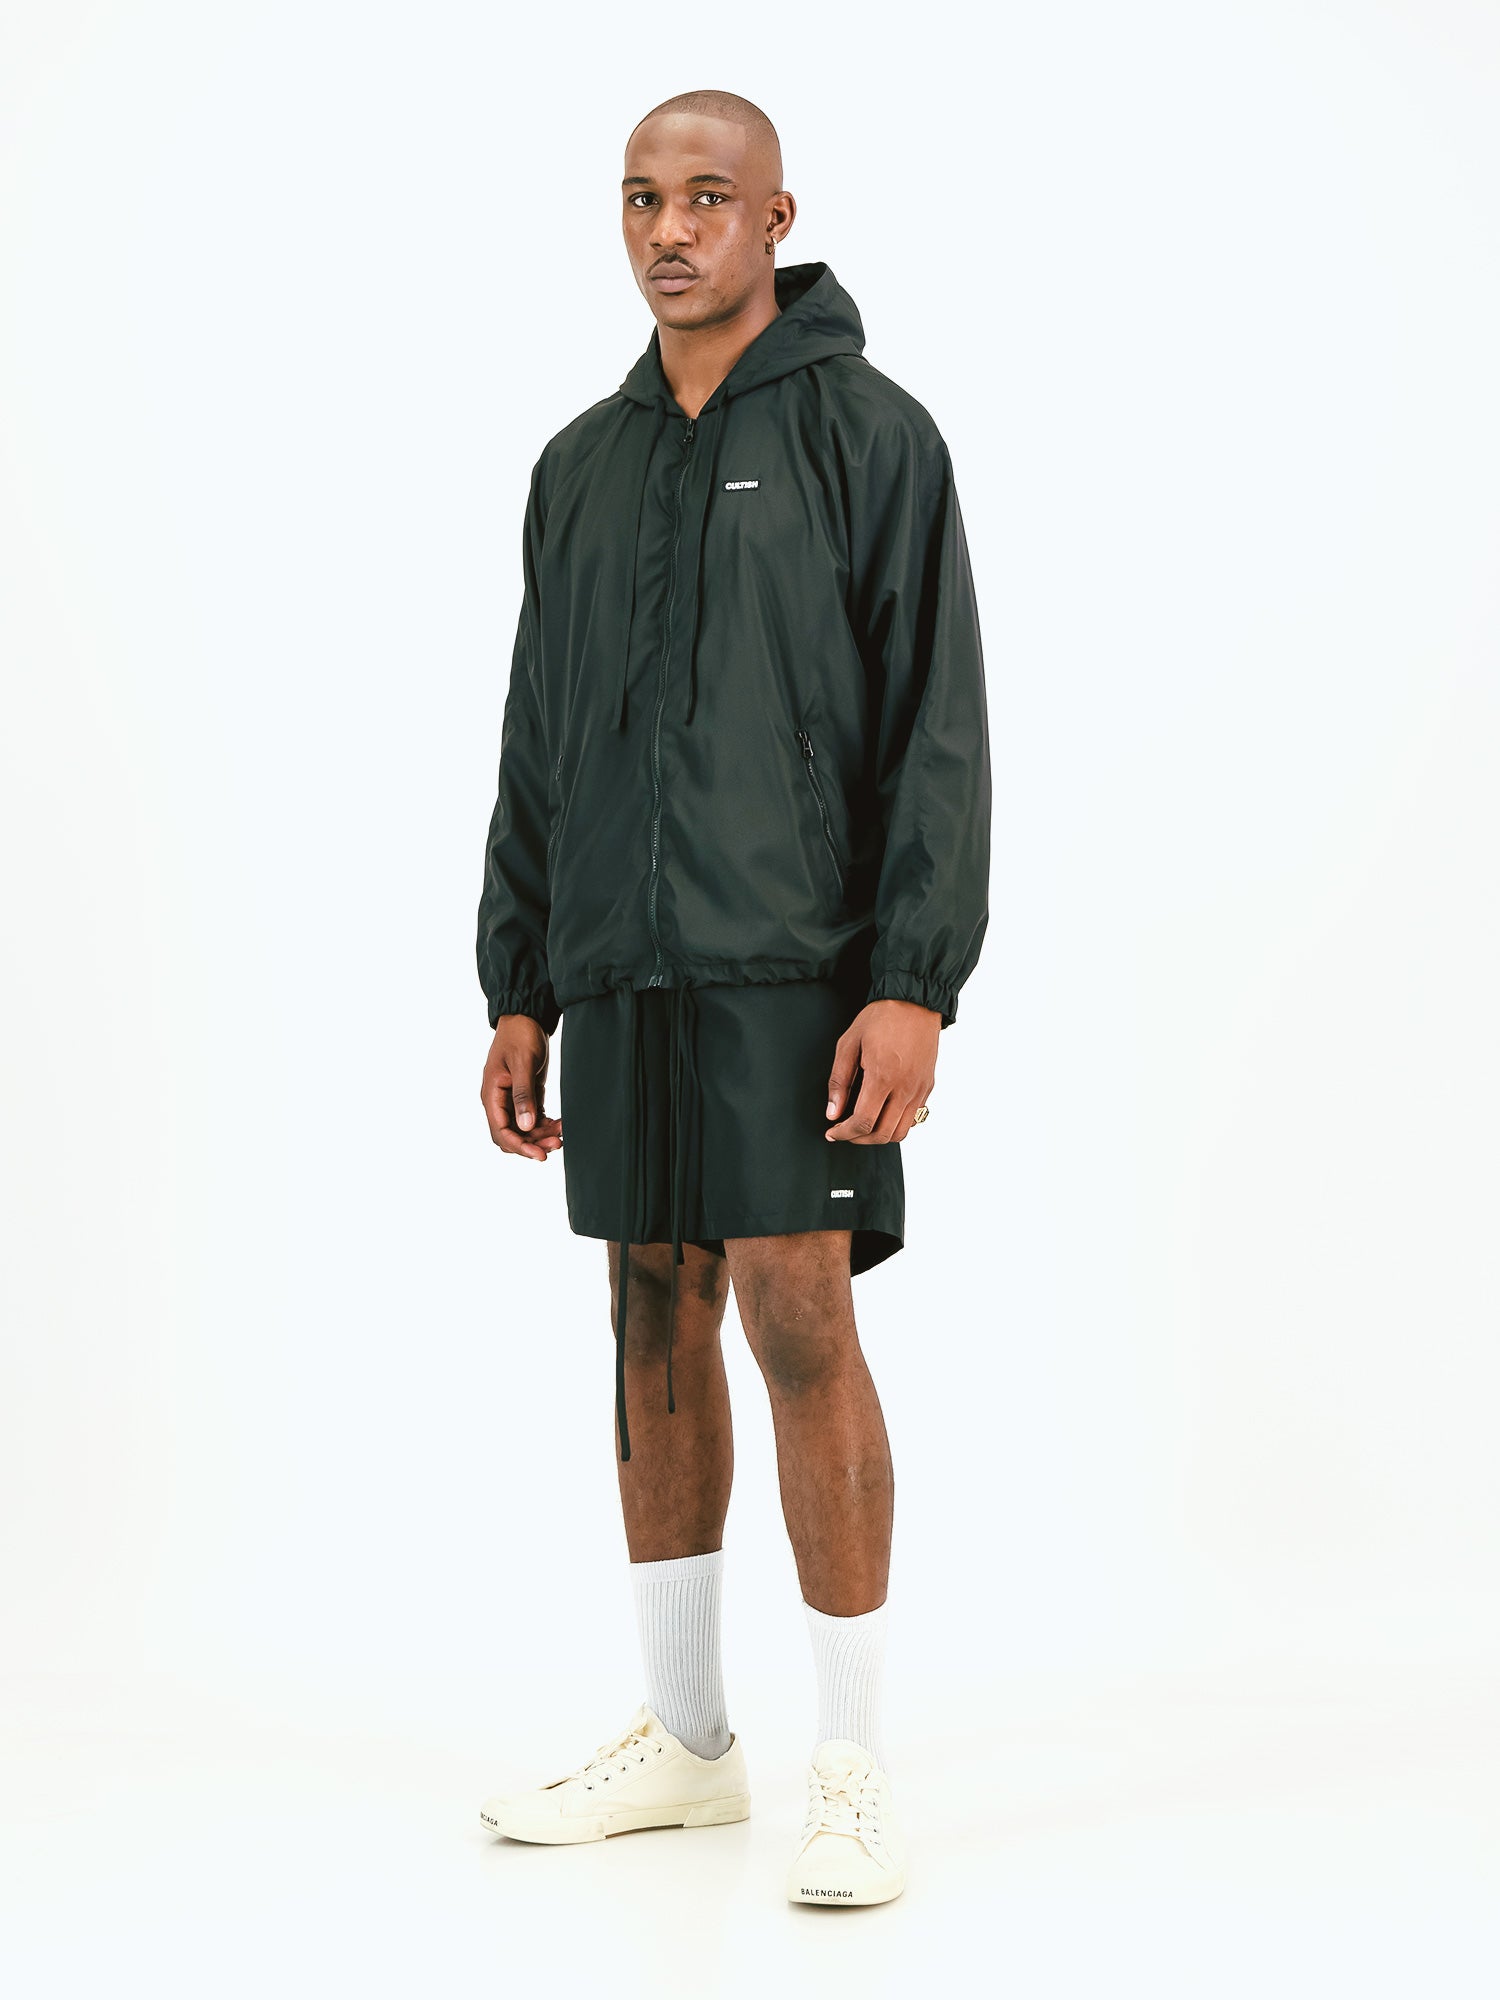 Staple Sports Jacket / Black